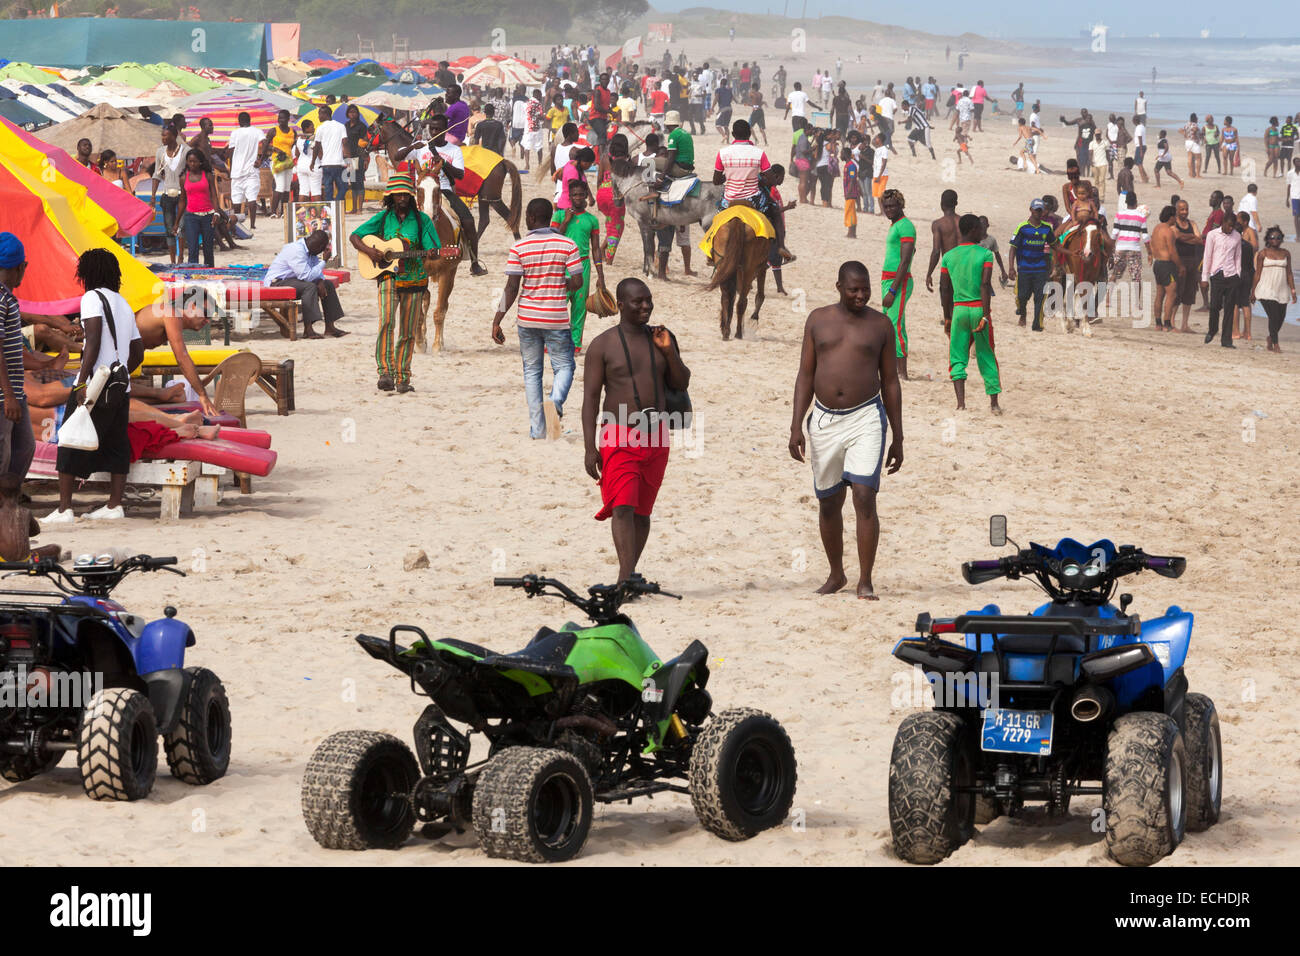 Crowds and dune buggies on Labadi beach, Accra, Ghana, Africa Stock Photo